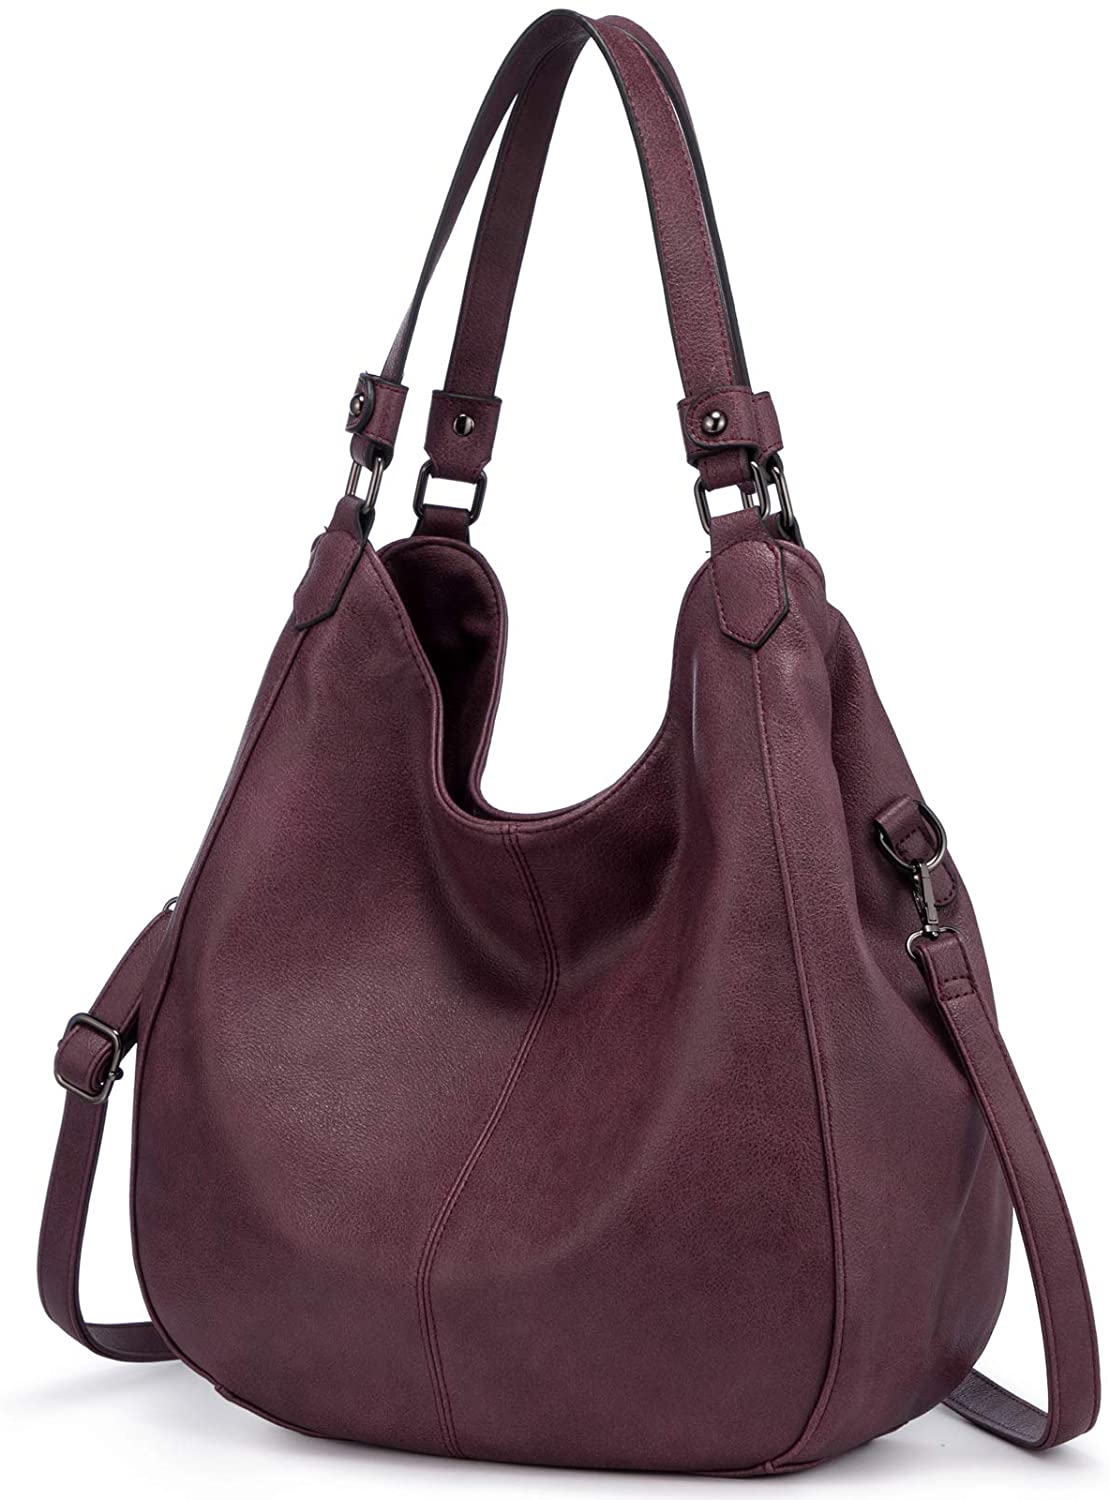 Designer Handbags Womens Ladies Faux Leather Fashion Hobo Satchel Shoulder Bags 